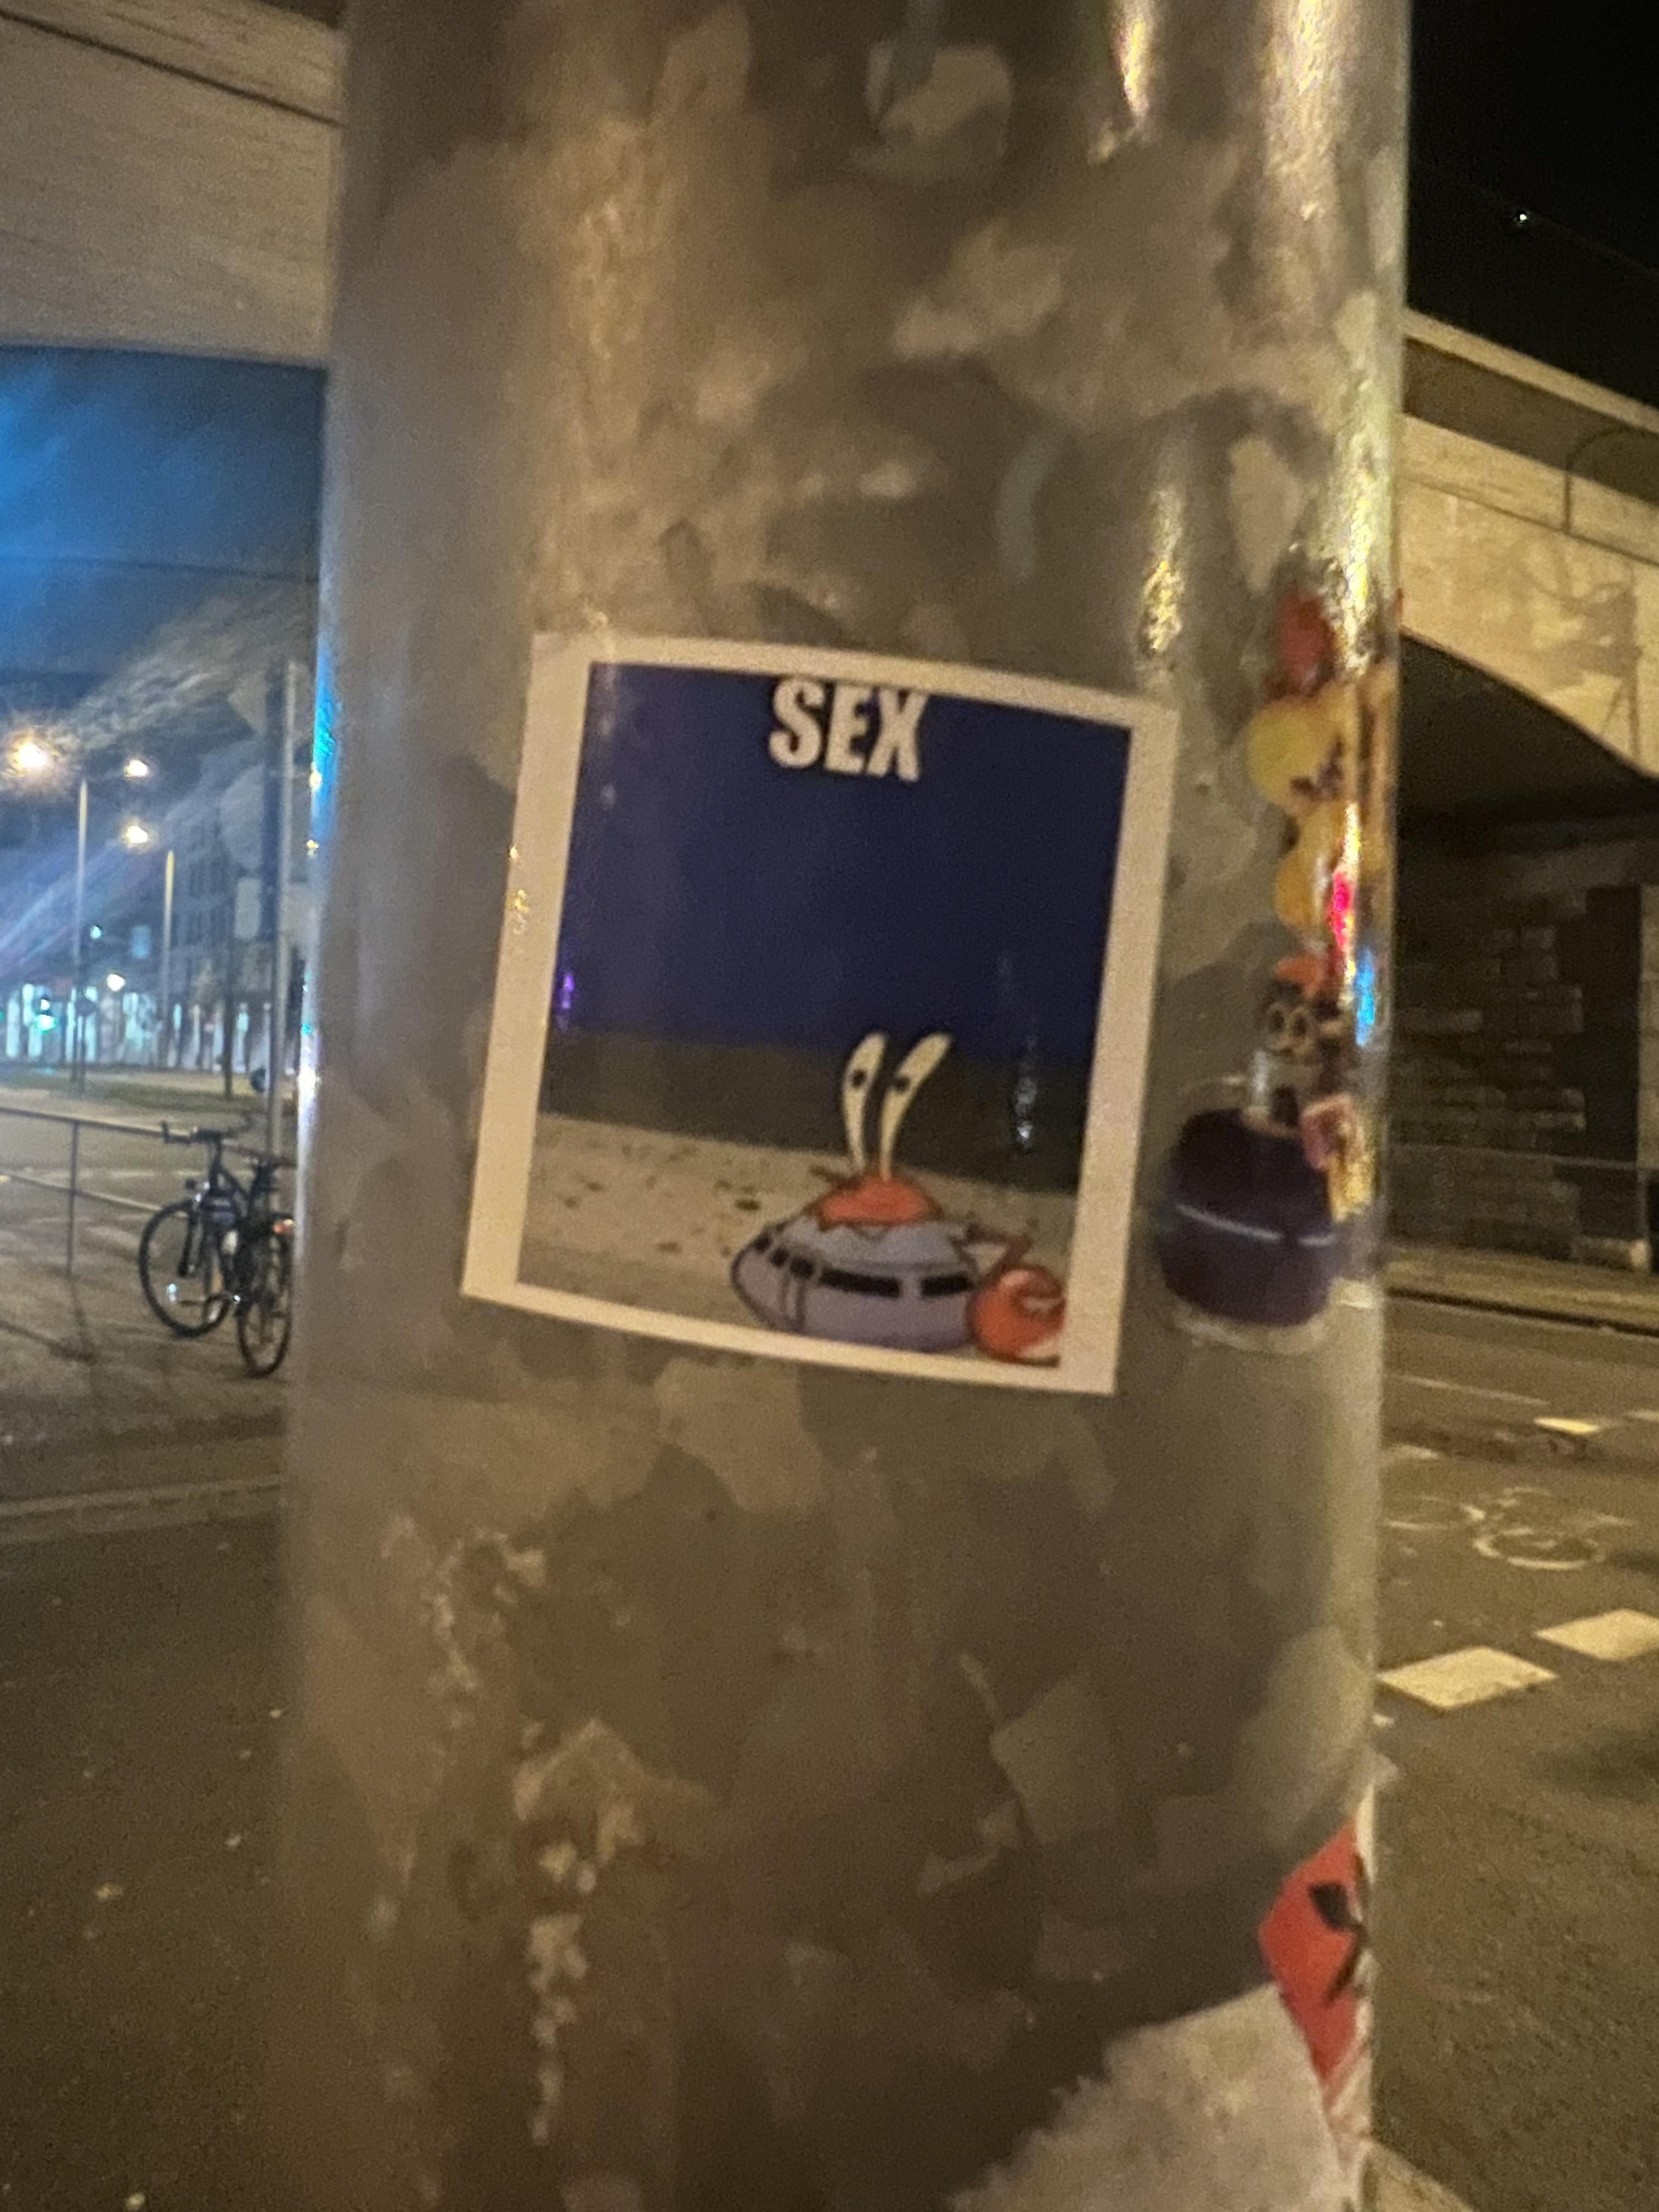 I found a lil Gem in my city